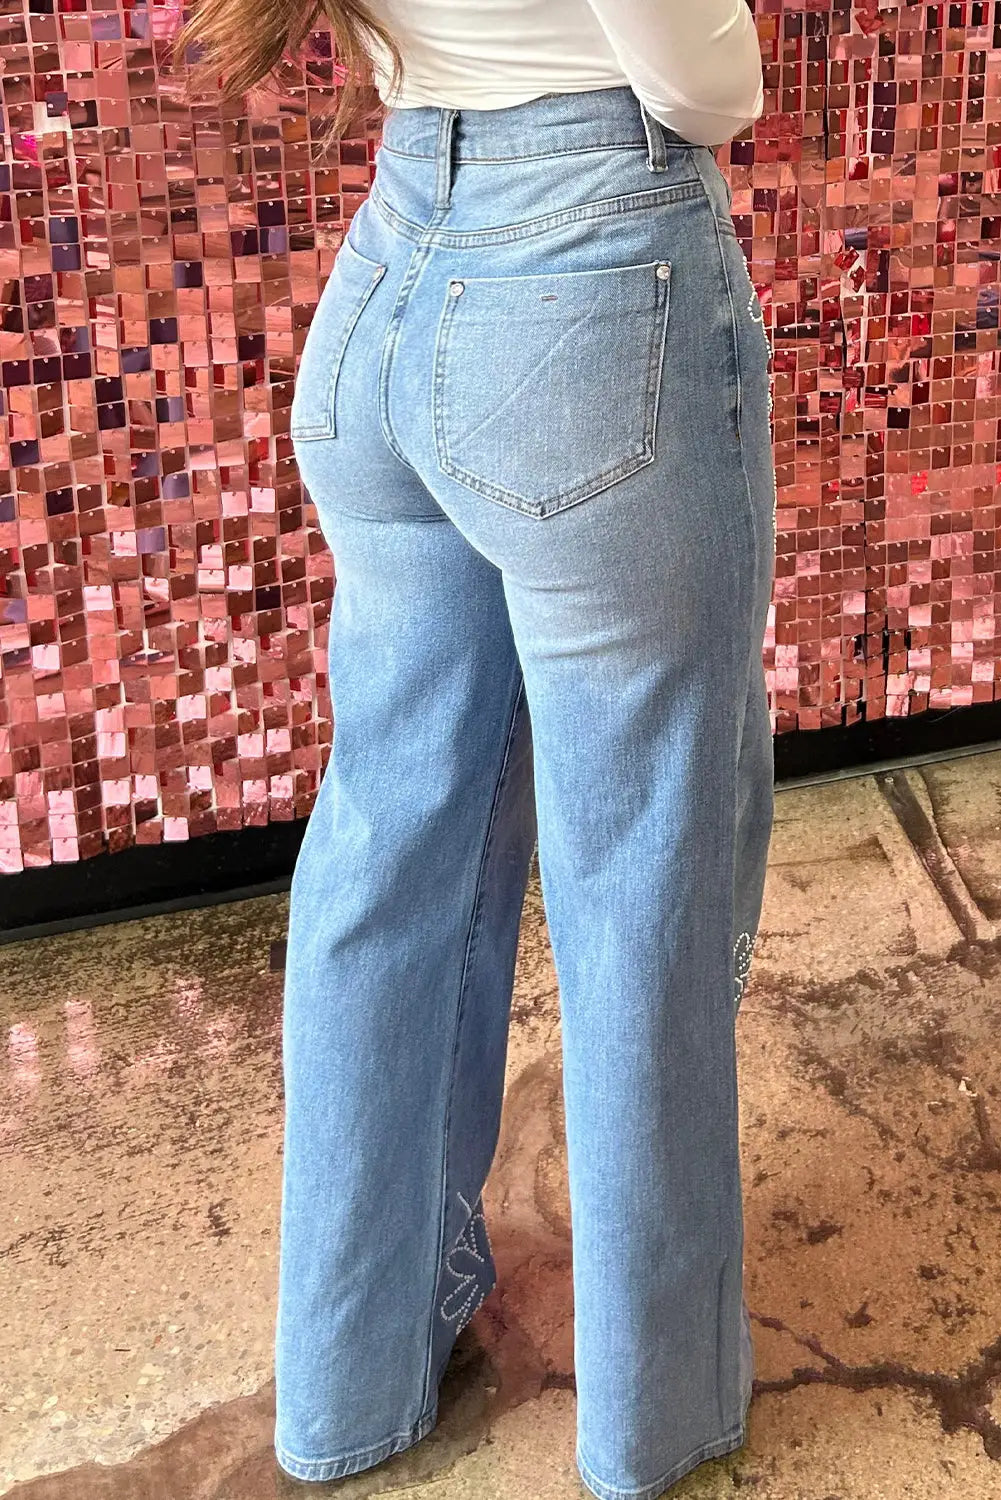 Wide leg jeans - light blue floral rhinestone decor high rise